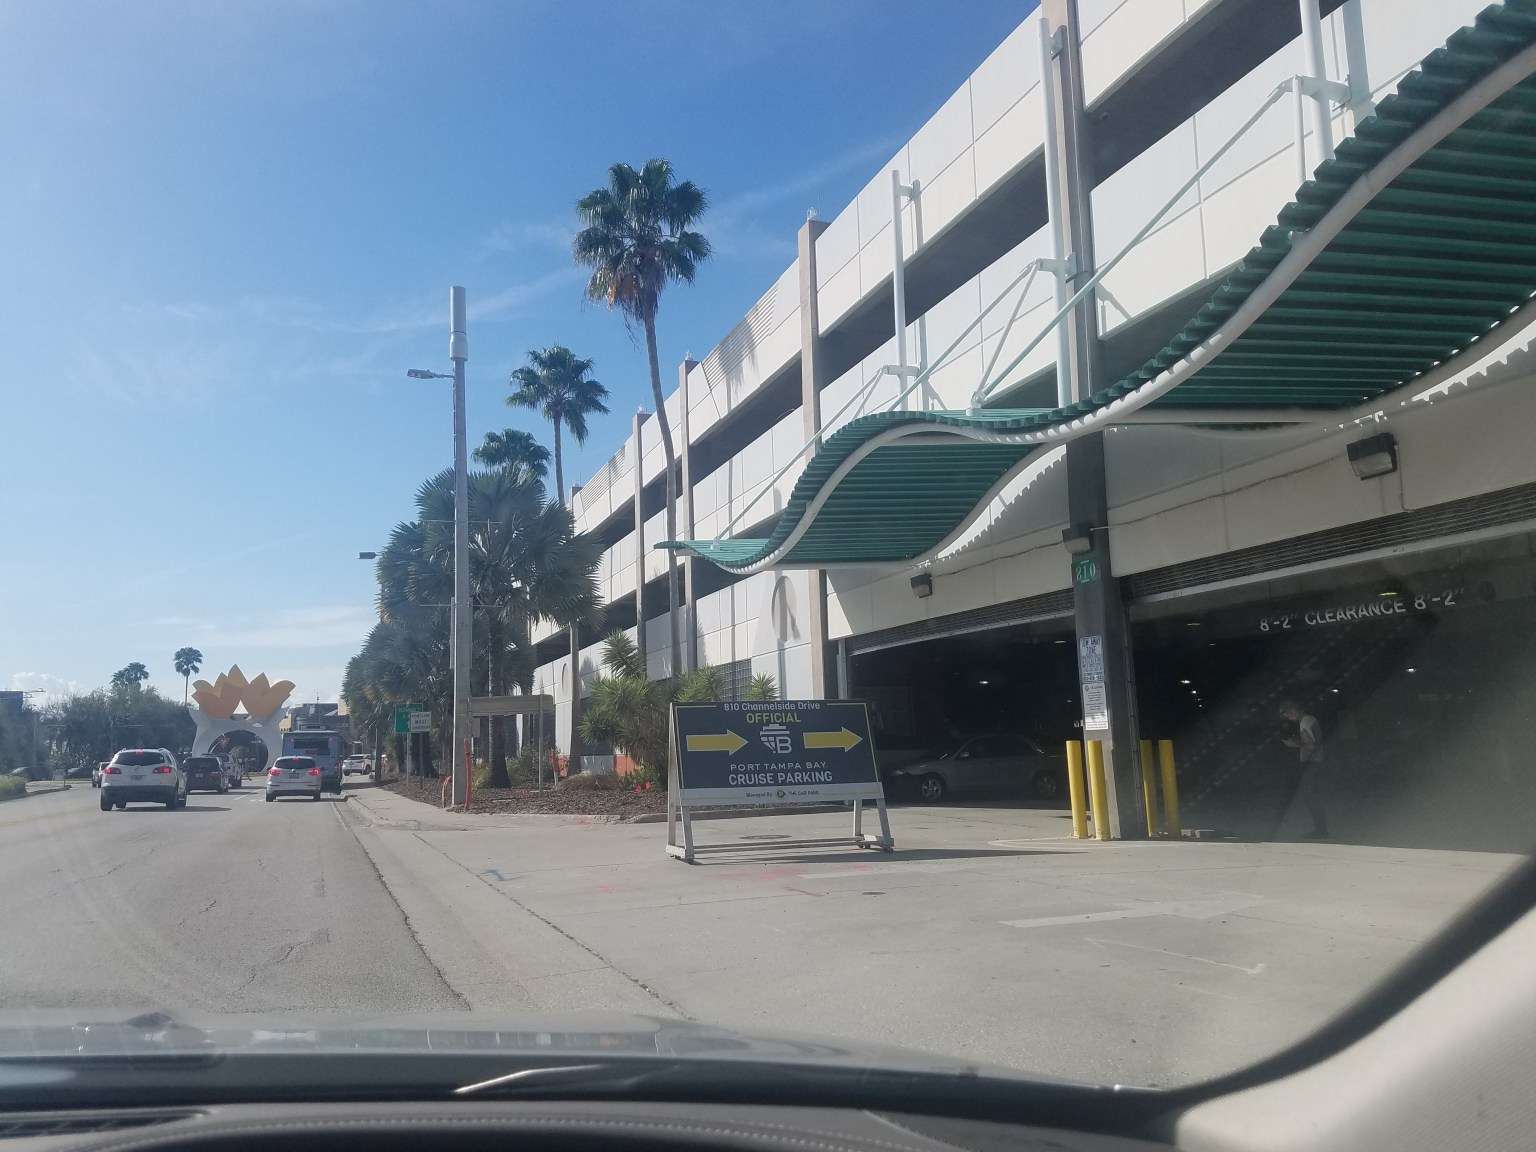 Port Tampa Bay onsite parking